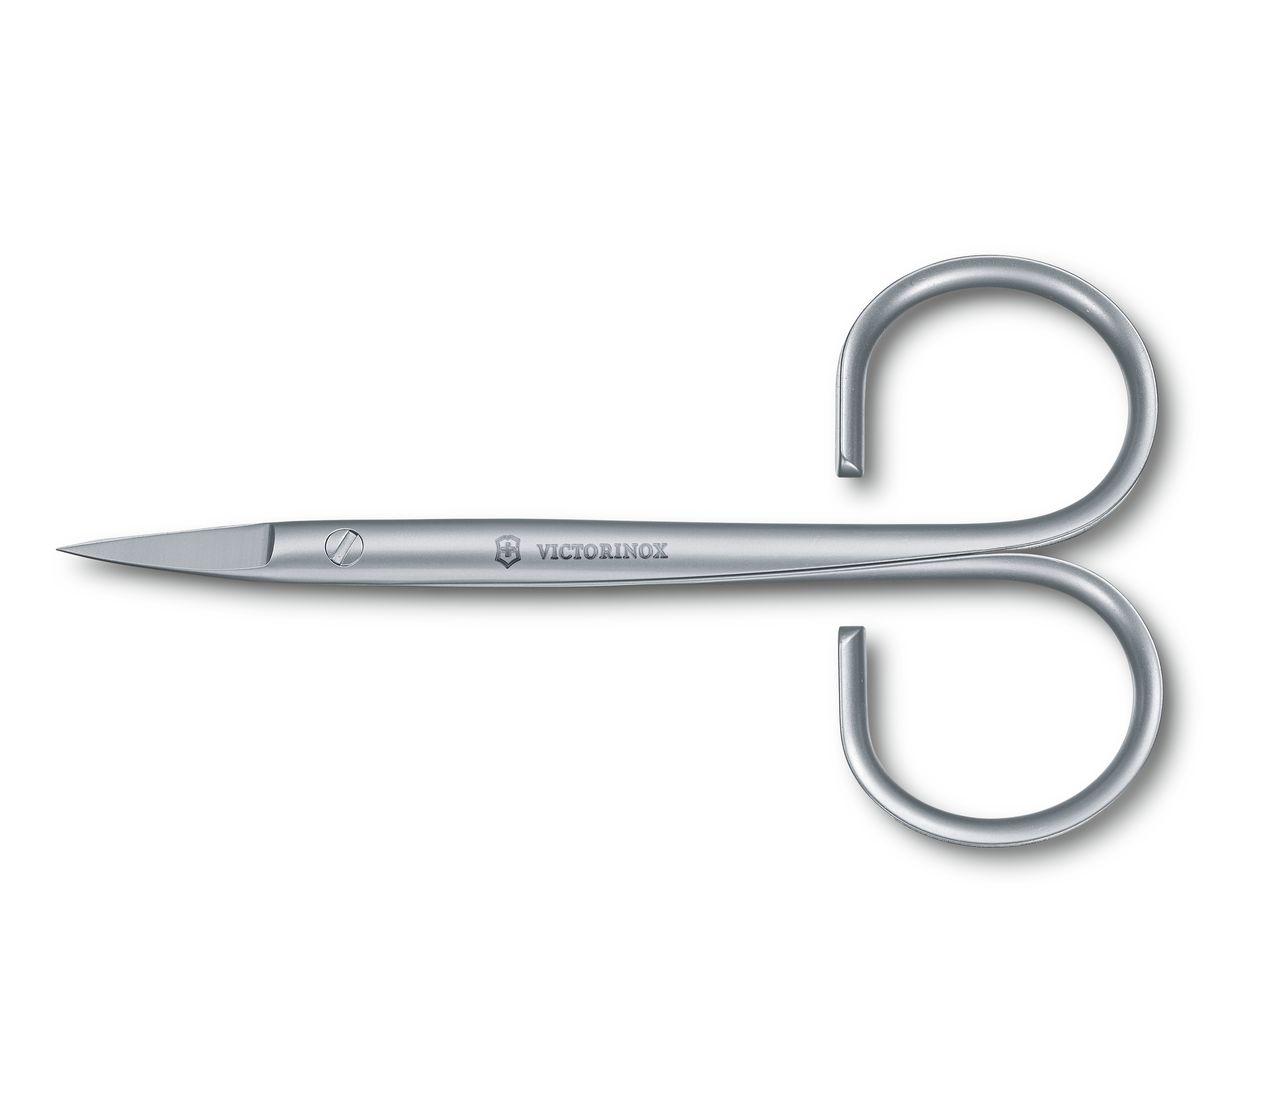 Victorinox Cuticle scissors